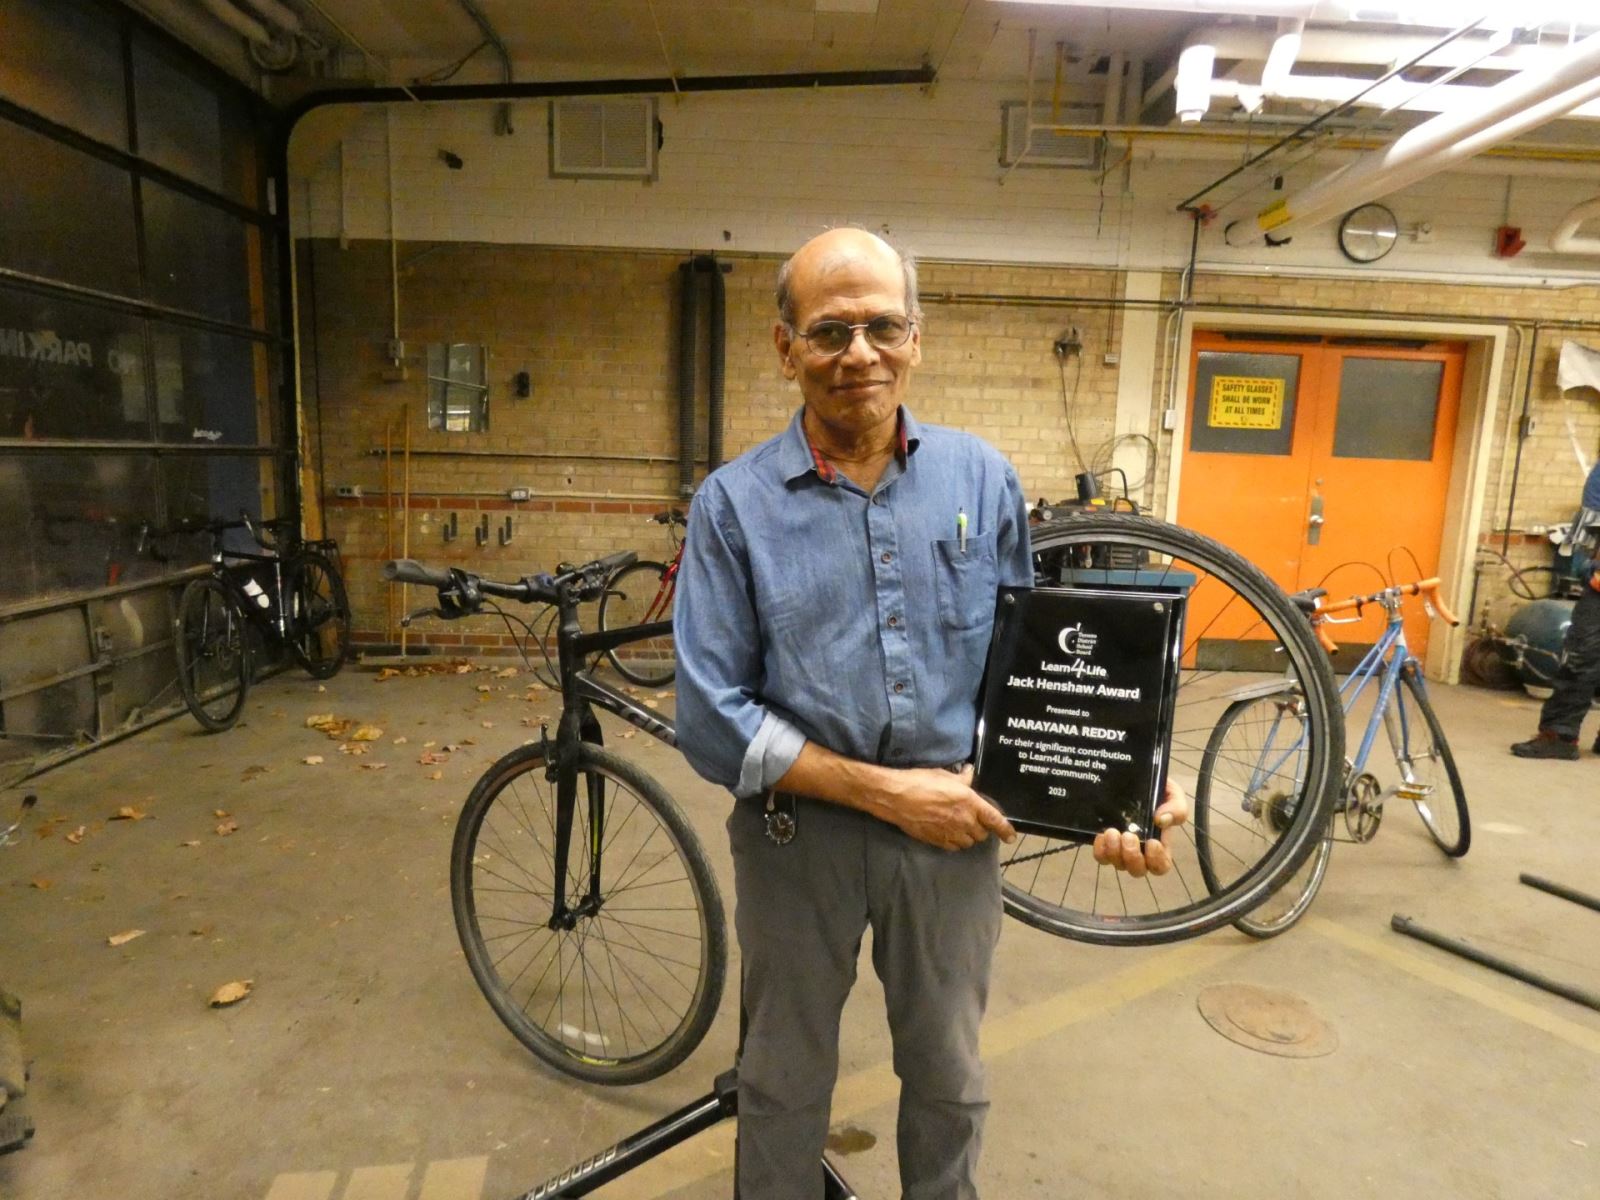 2023 Jack Henshaw Award Winner Narayana Reddy holding a plaque commemorating his award